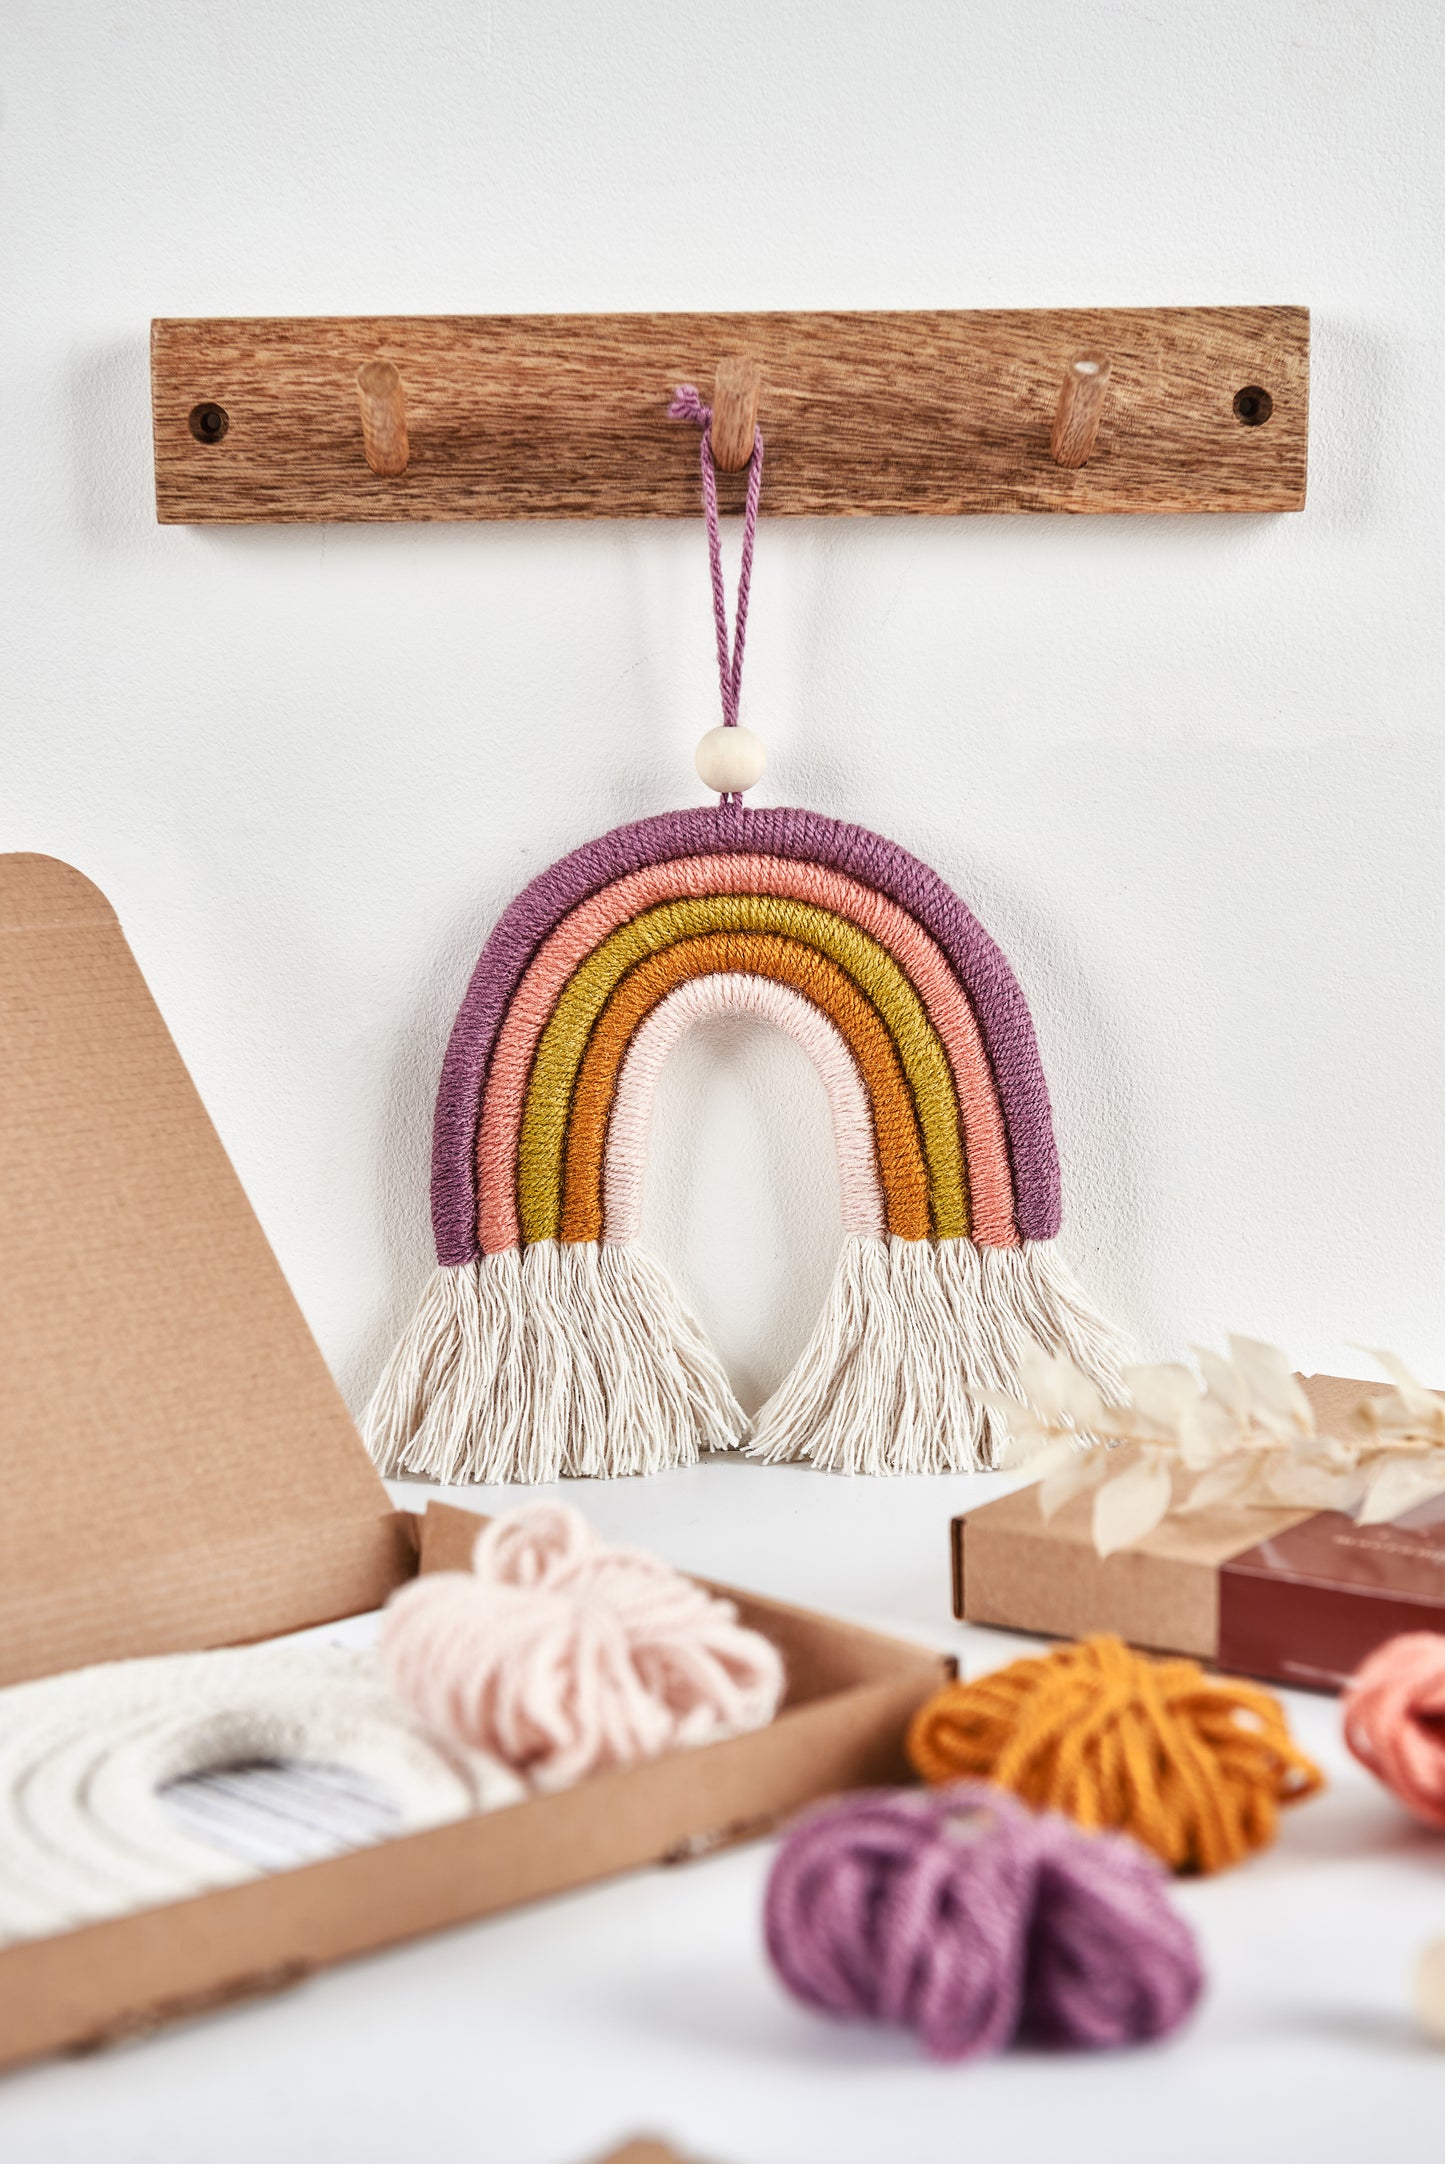 Make Your Own Spring Rainbow Macrame Craft Kit